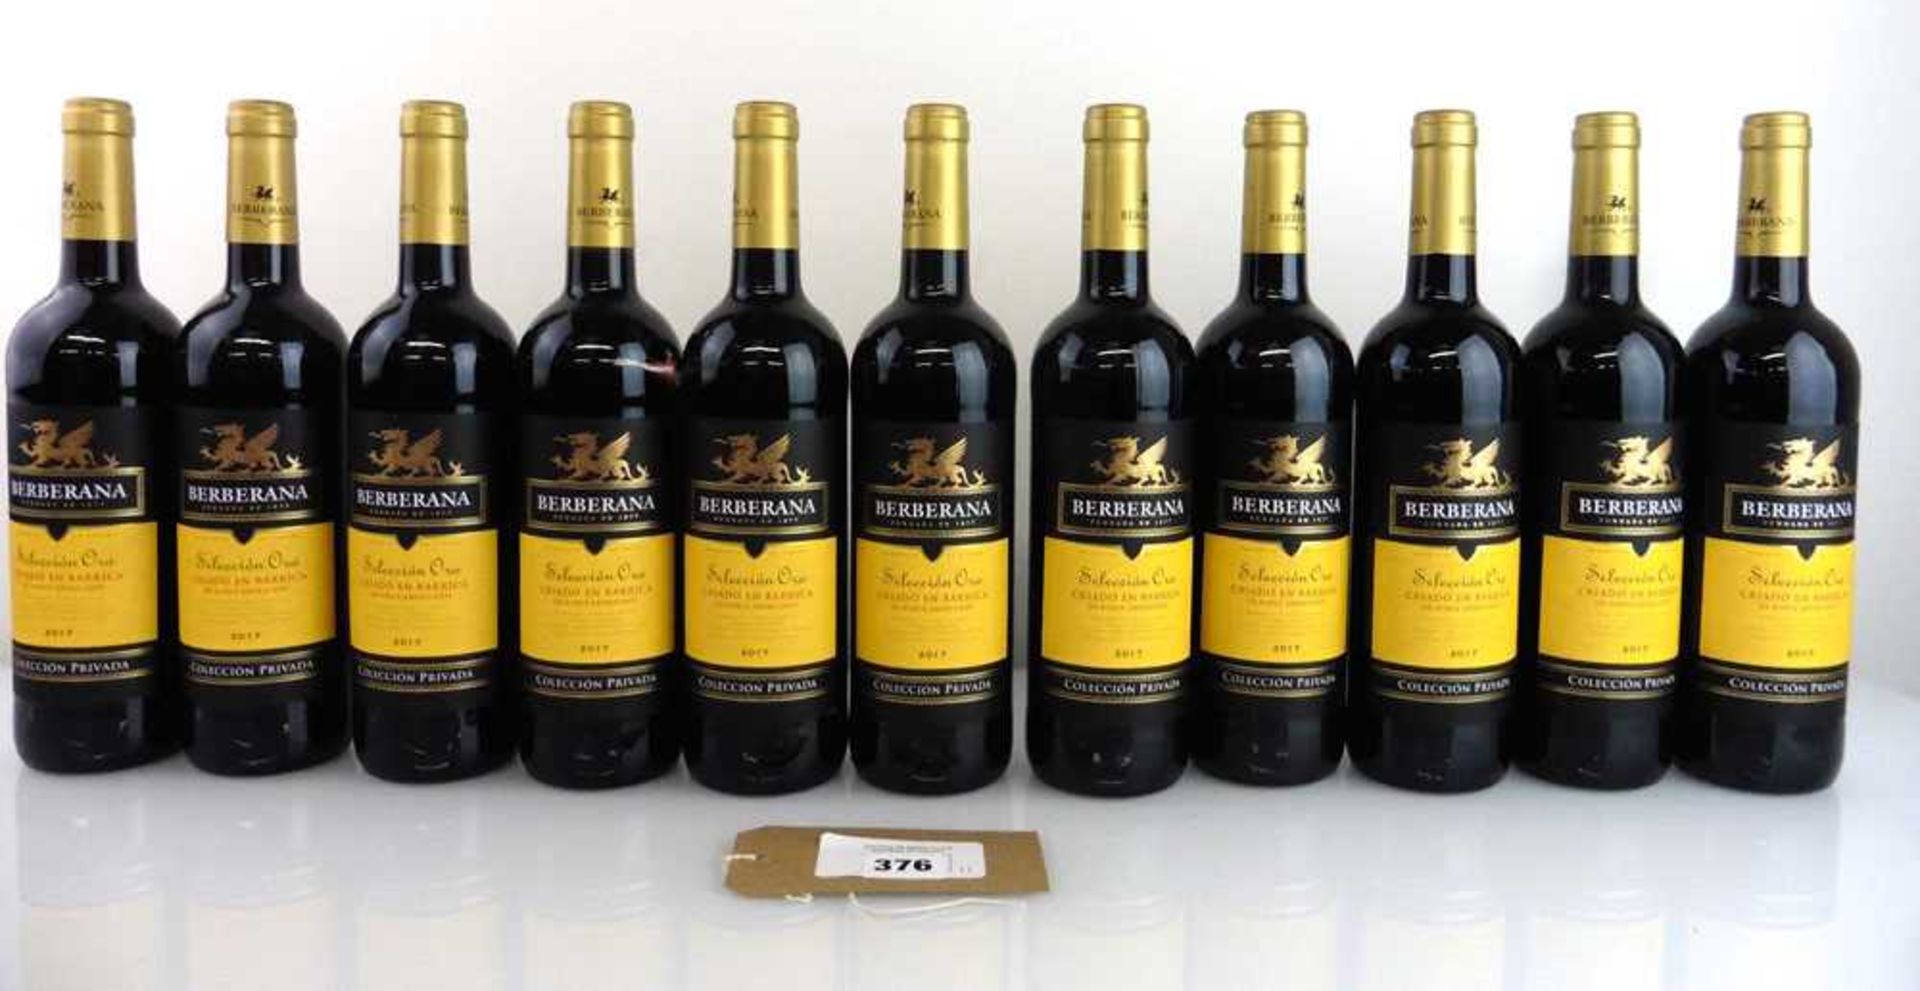 +VAT 11 bottles of Berberana Seleccion Oro Criado En Barrica 2017 (Note VAT added to bid price)